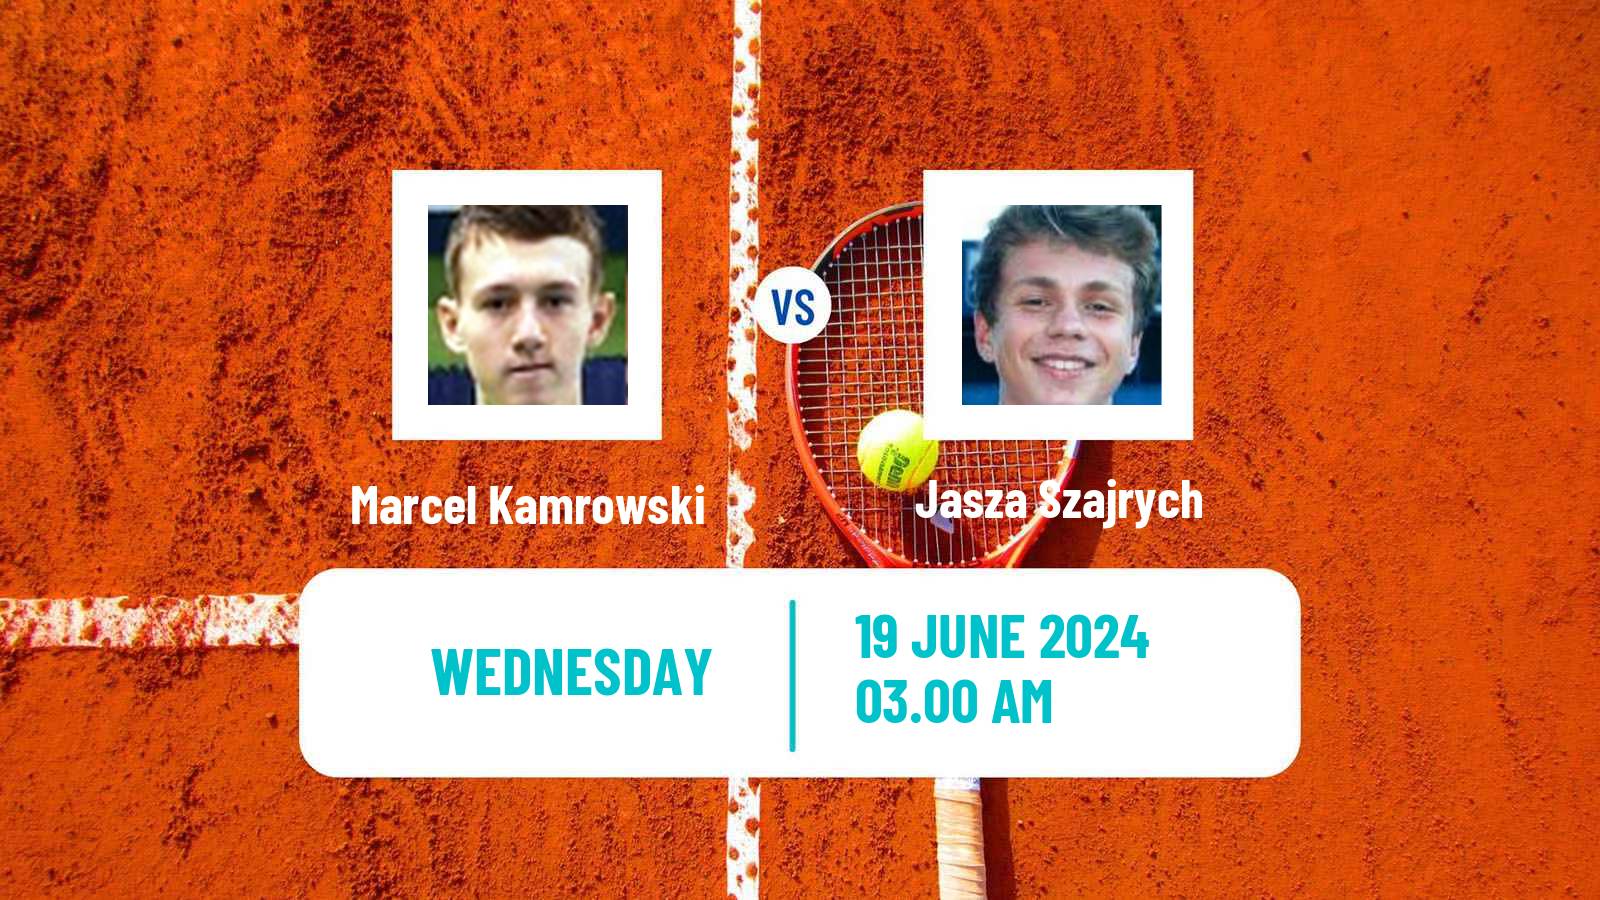 Tennis ITF M15 Koszalin 2 Men Marcel Kamrowski - Jasza Szajrych